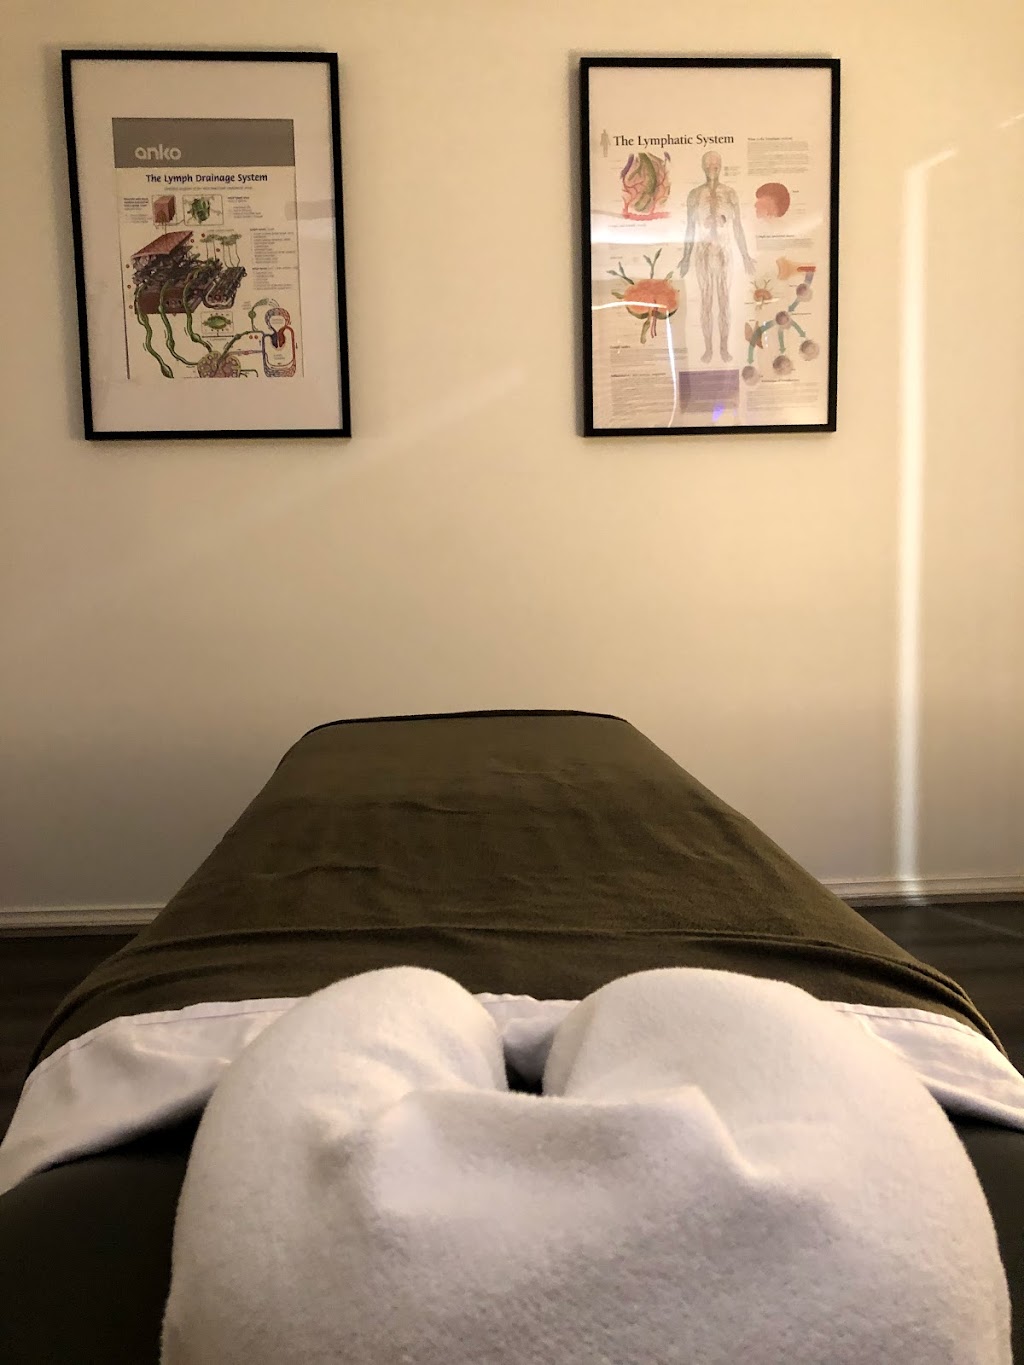 Just Breathe Massage Therapy | 27 Manna Gum Rd, Narellan Vale NSW 2567, Australia | Phone: 0404 742 958